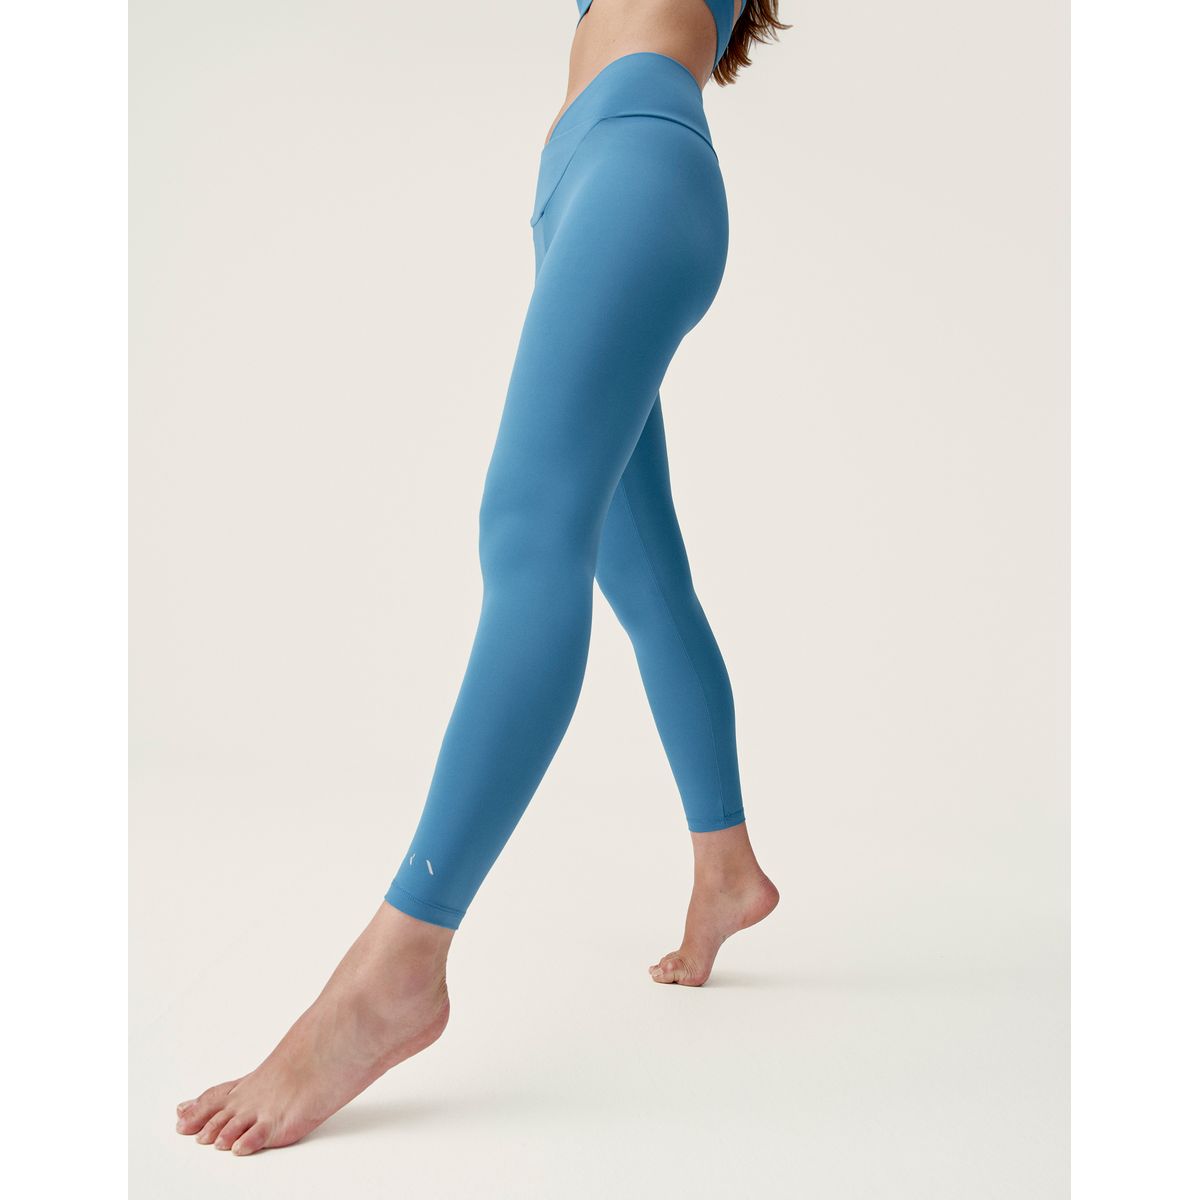 OverDose Soldes Legging en Dentelle Grande Taille Legging de Yoga 3/4 Longuer Pantalon Skinny Taille élastique Sportswear sans Coutures Respirante 